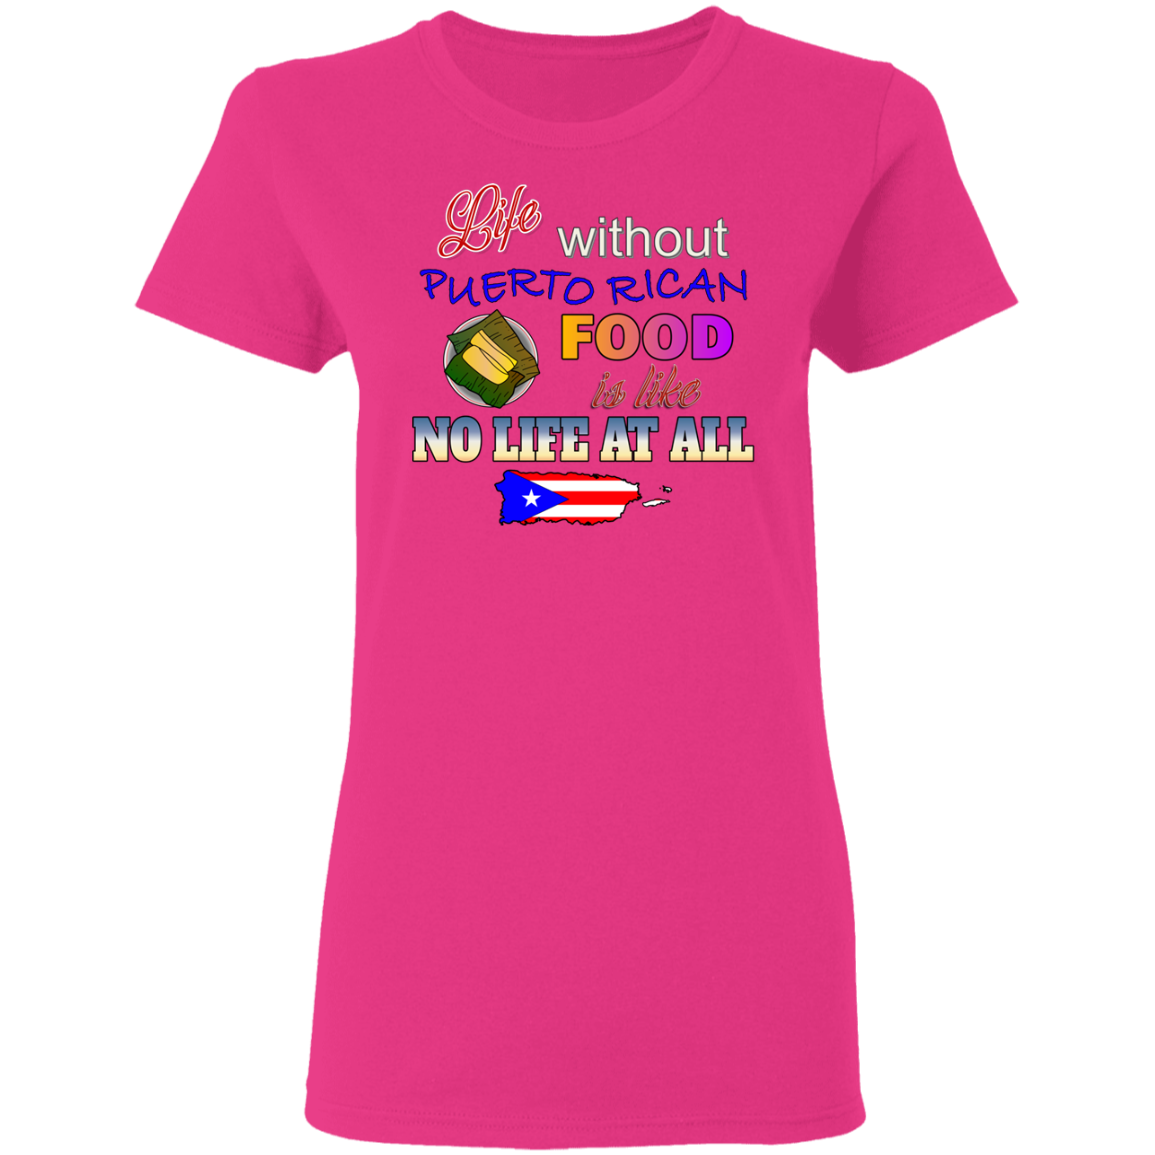 Life W/O PR Food - Ladies' 5.3 oz. T-Shirt - Puerto Rican Pride